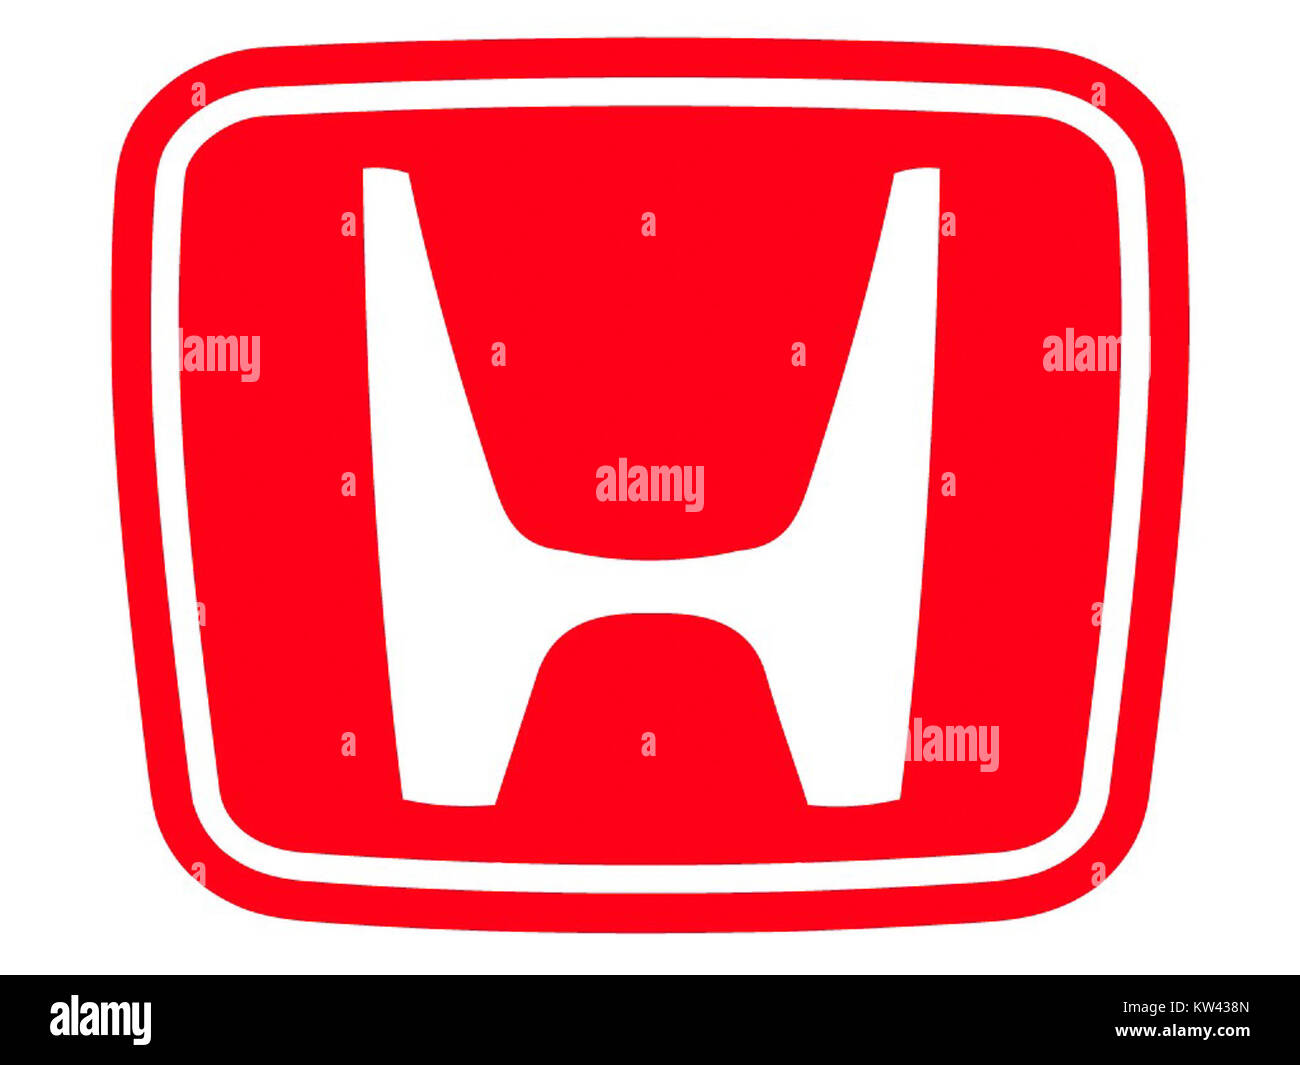 Honda Formula One logo 1960s Stock Photo